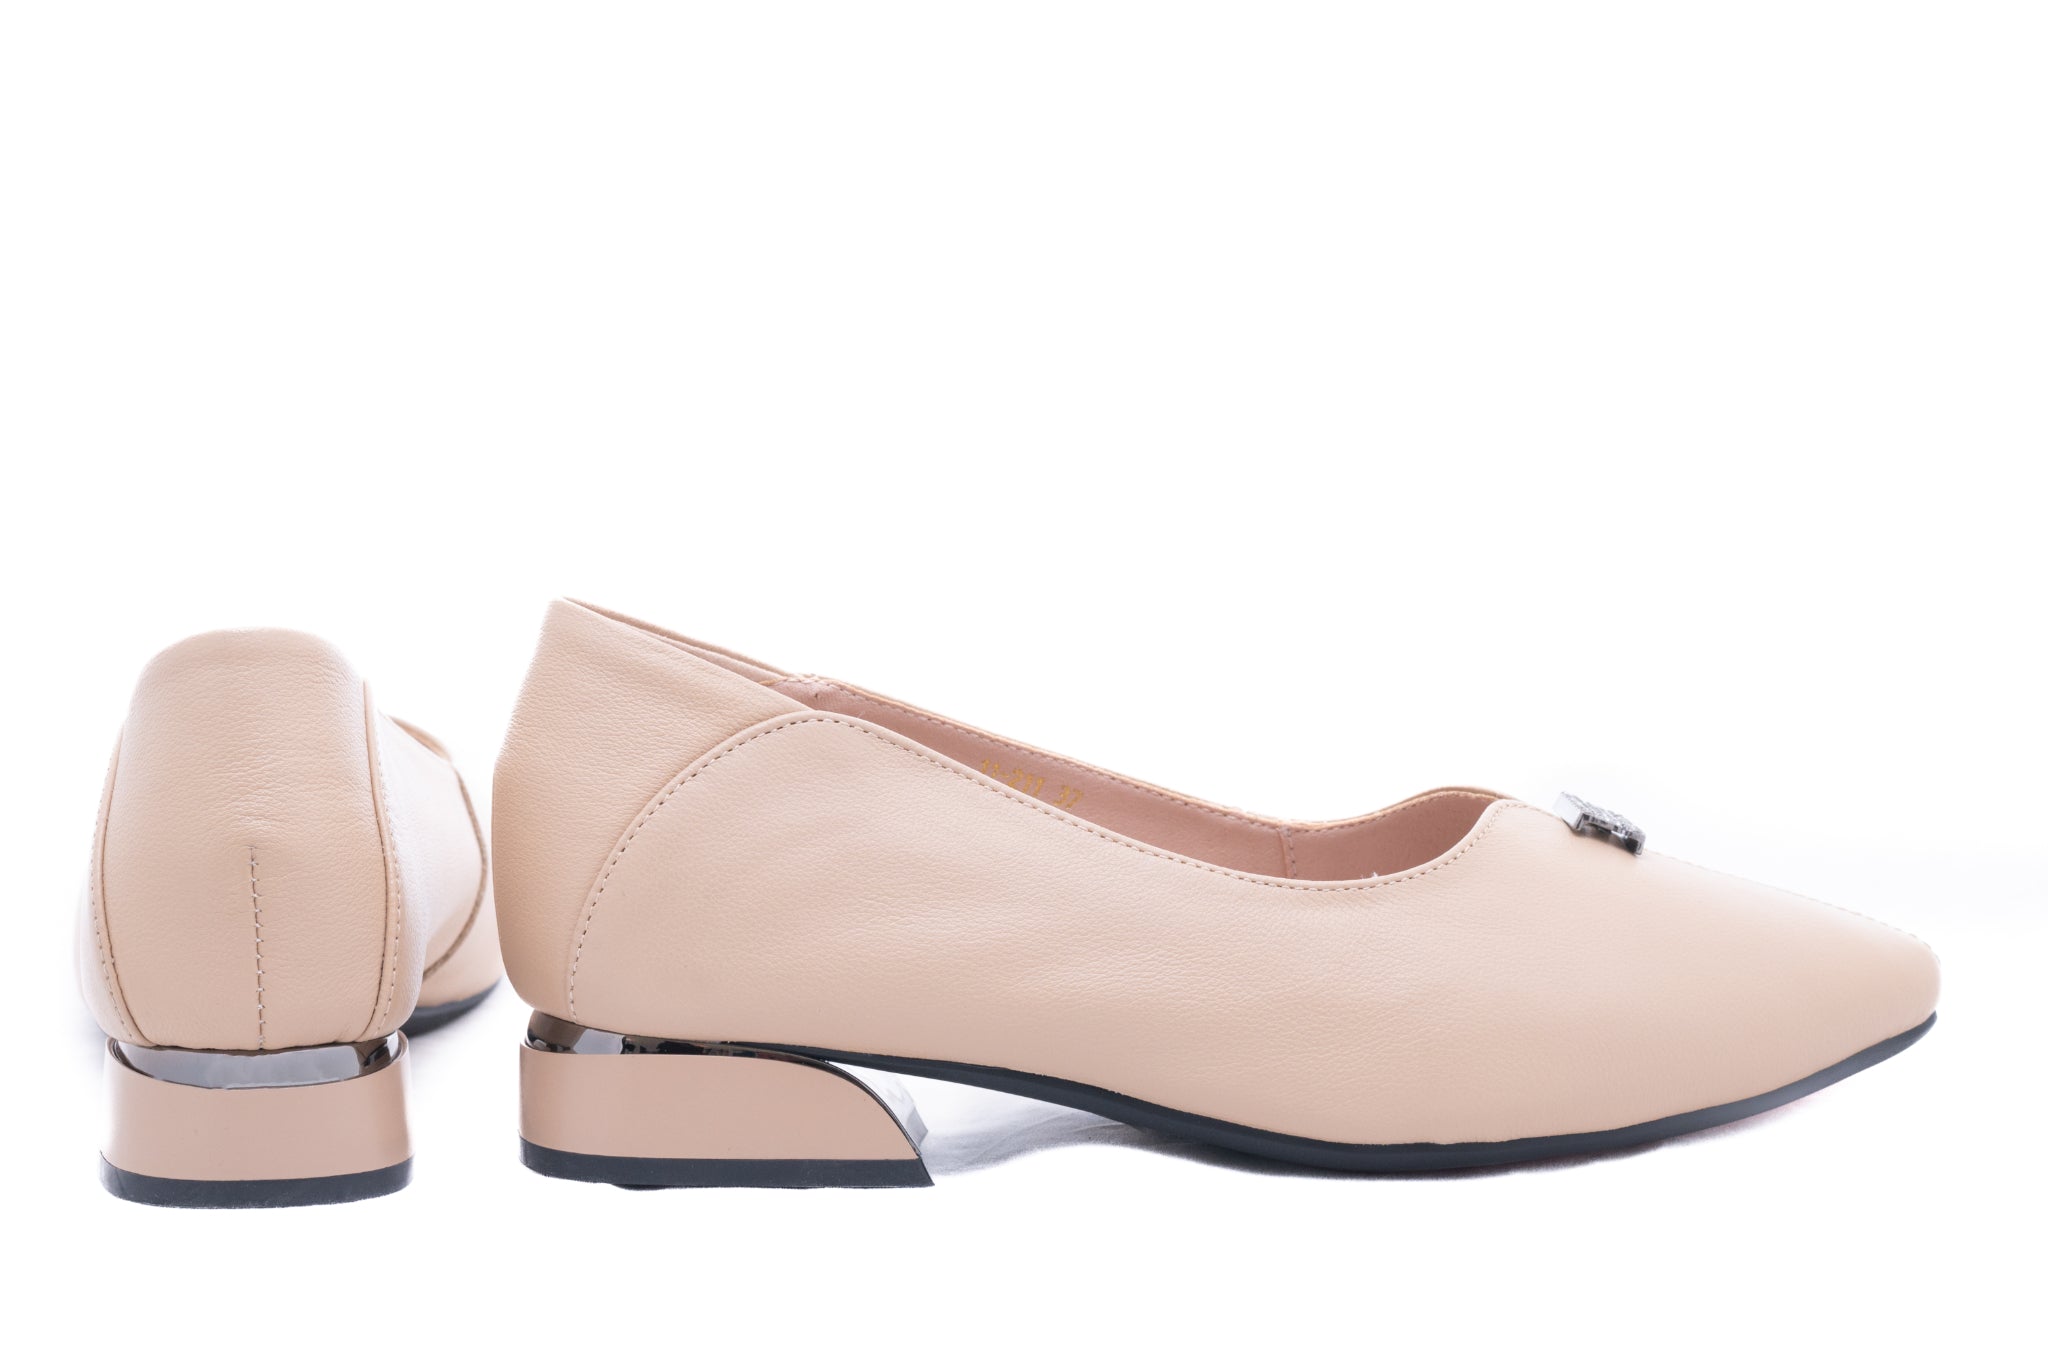 Pantofi dama eleganti piele naturala 11-211 apricot